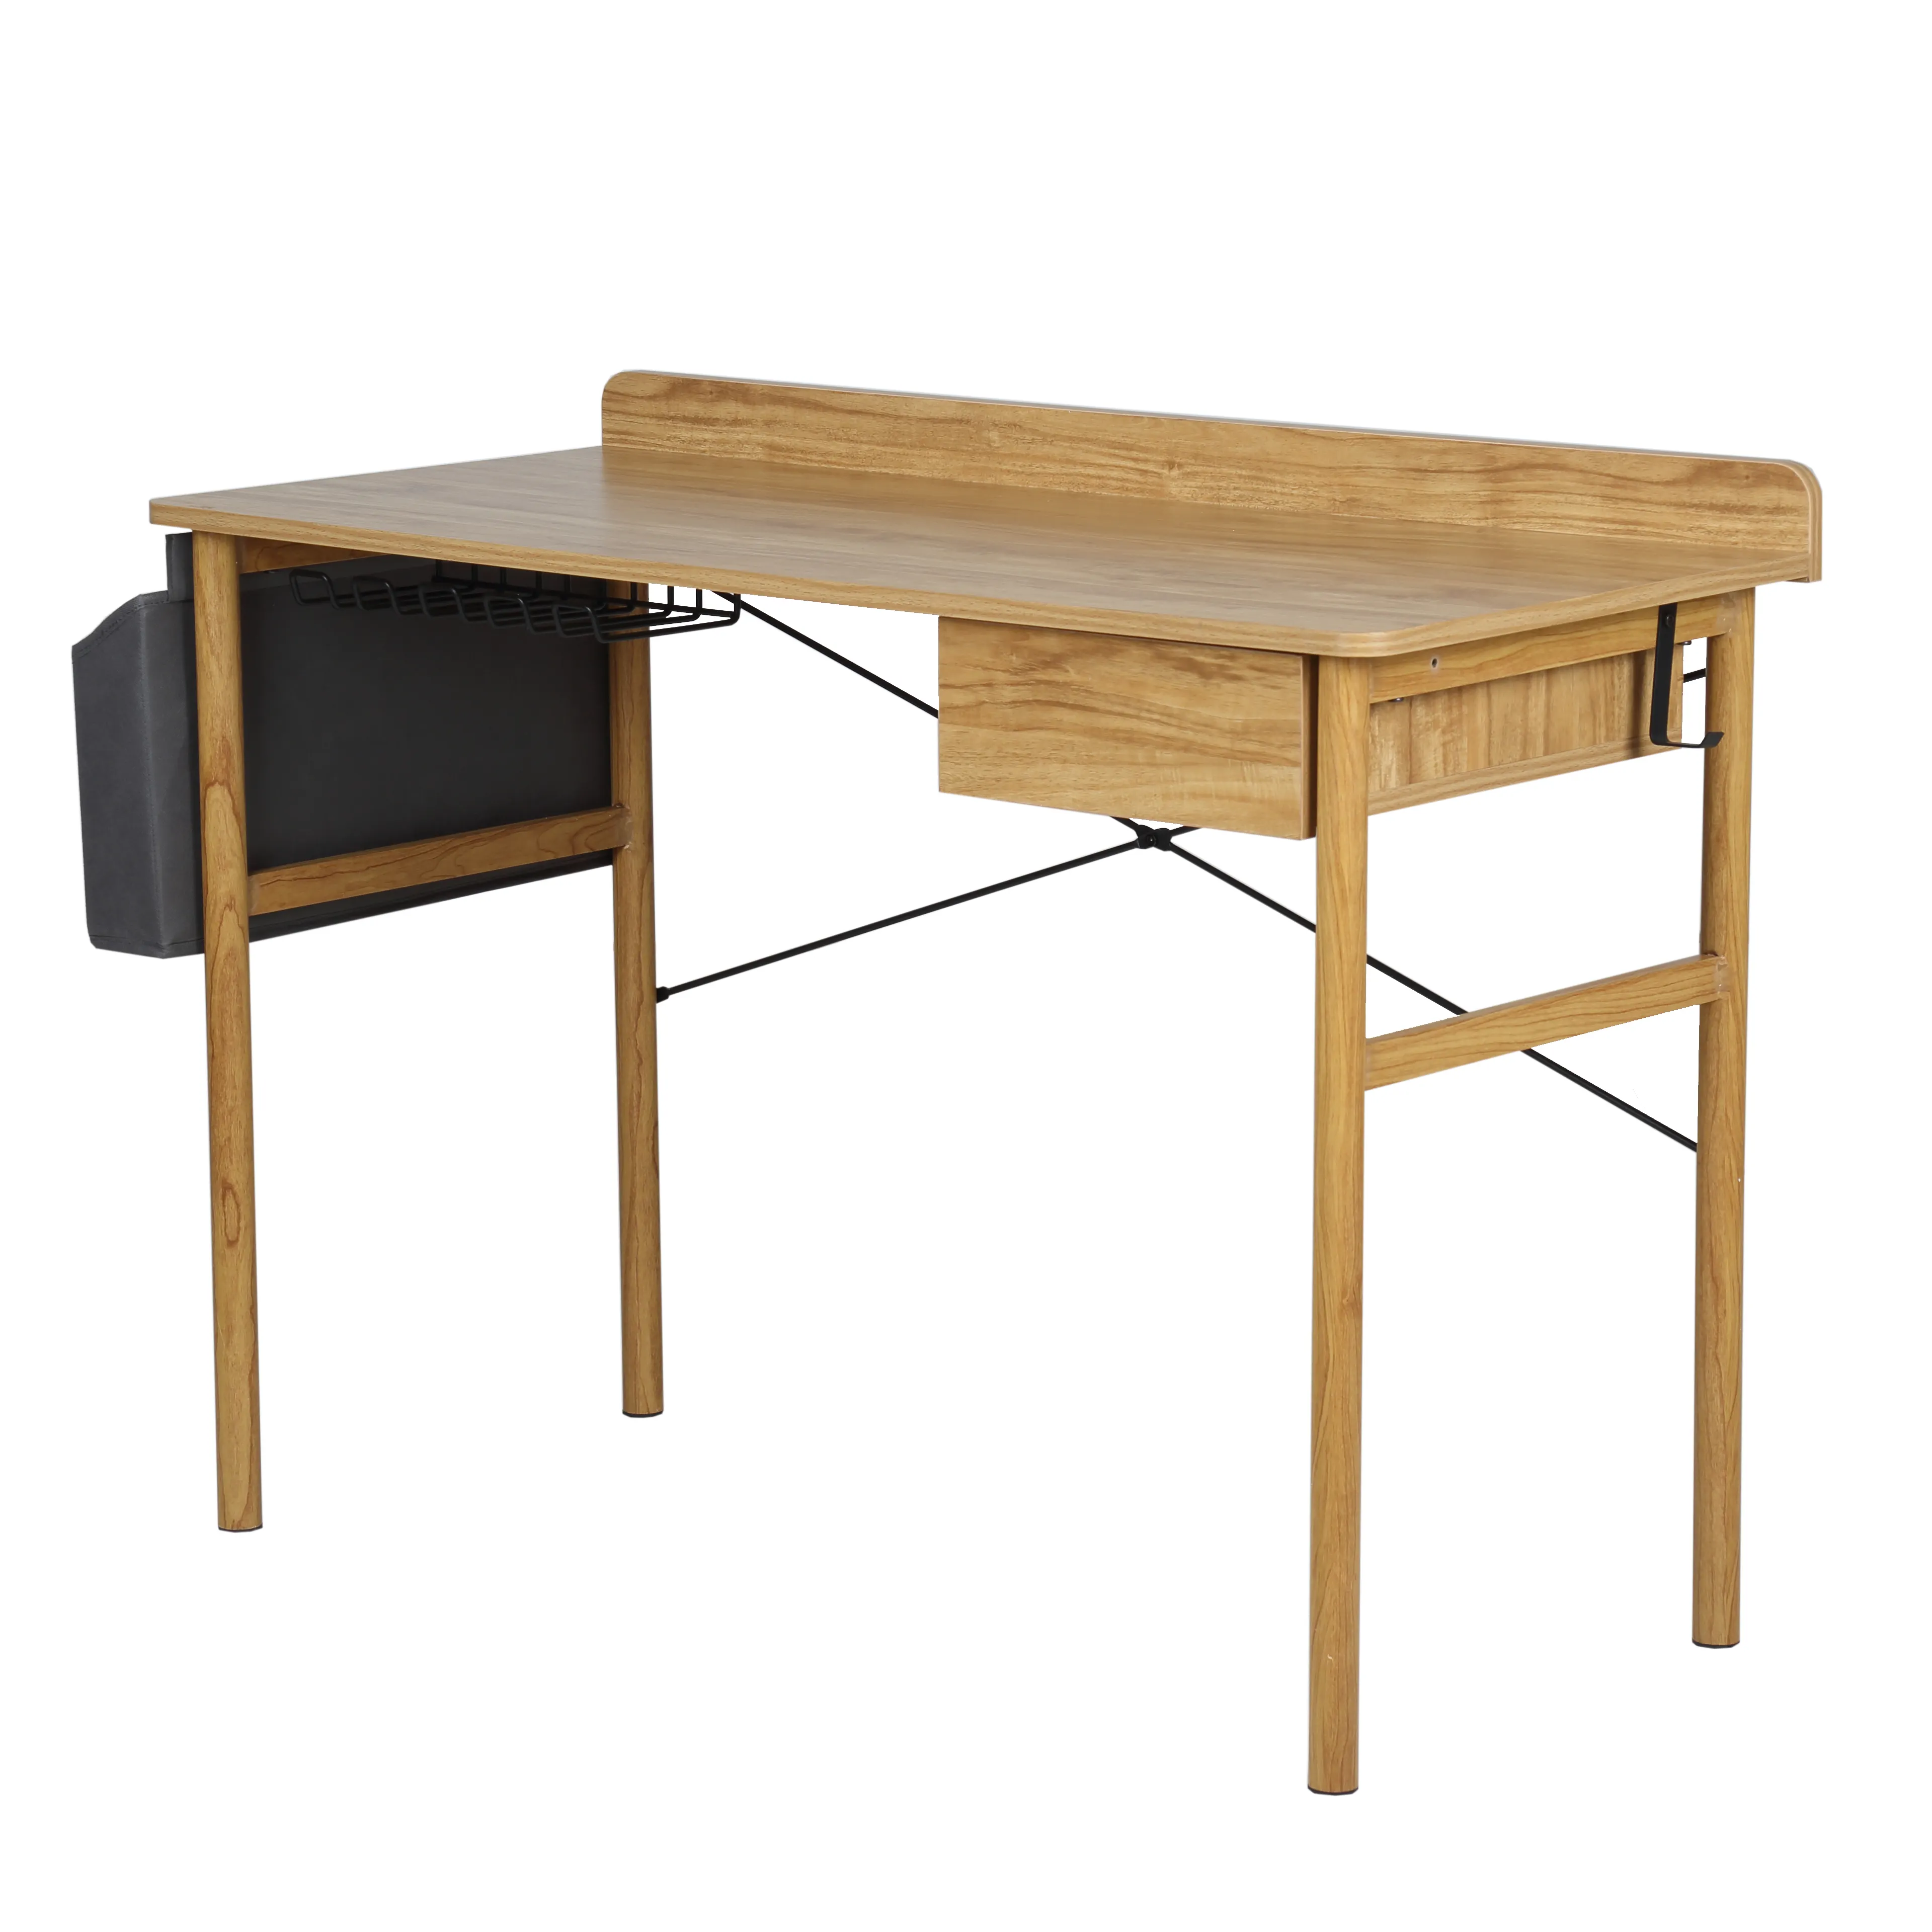 Modern Office Laptop Computer Table Desk With Painted Wooden Desktop Wooden Legs